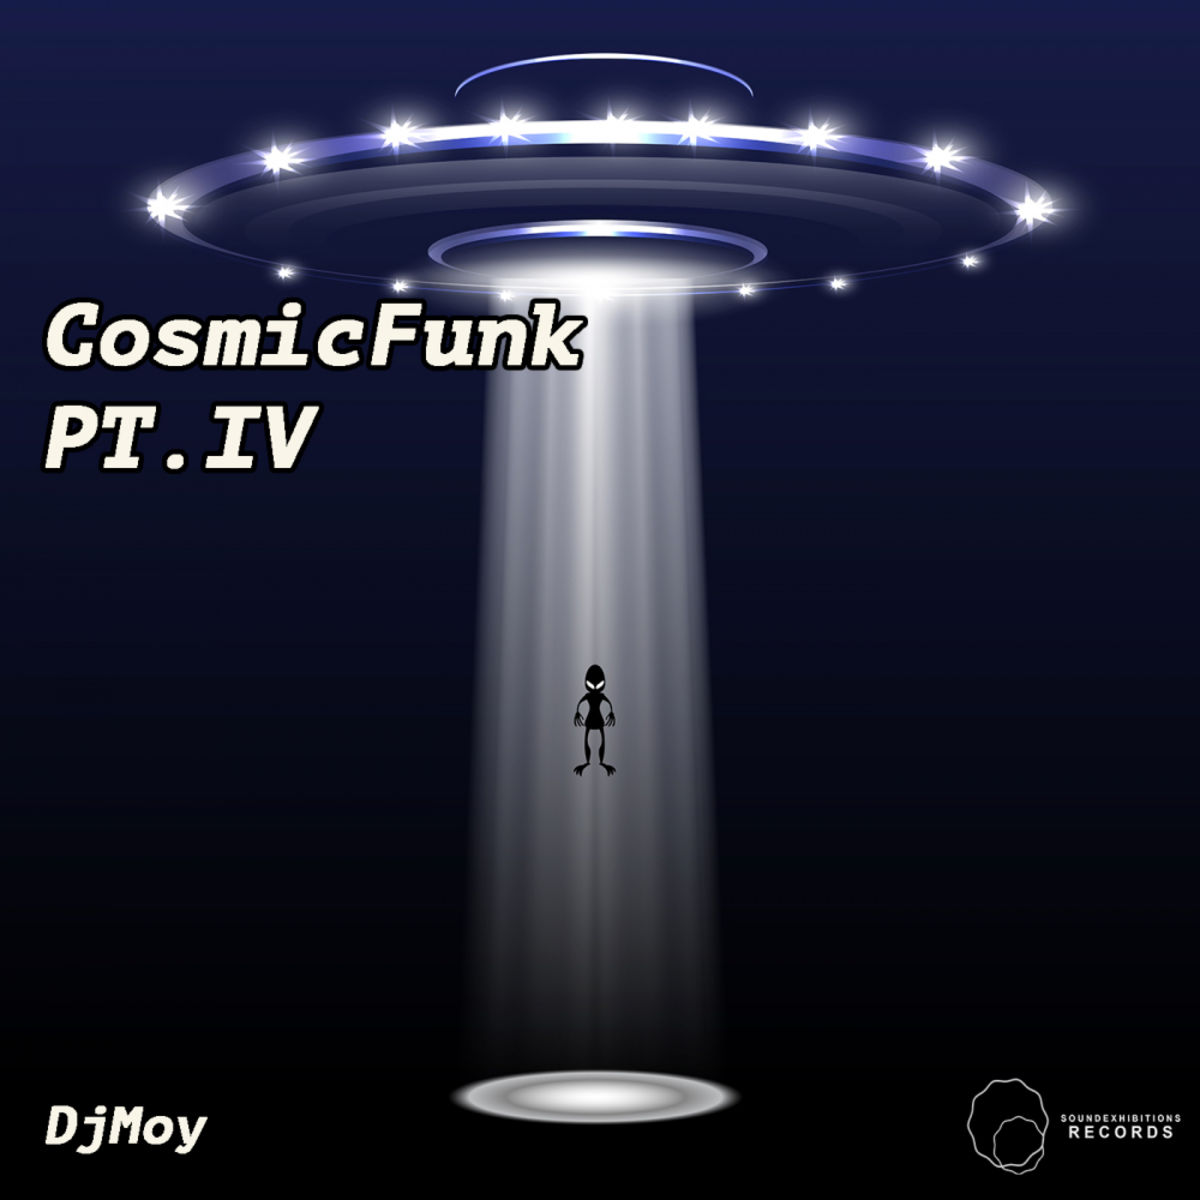 Dj Moy - Cosmic Funk Iv / Sound Exhibitions Records